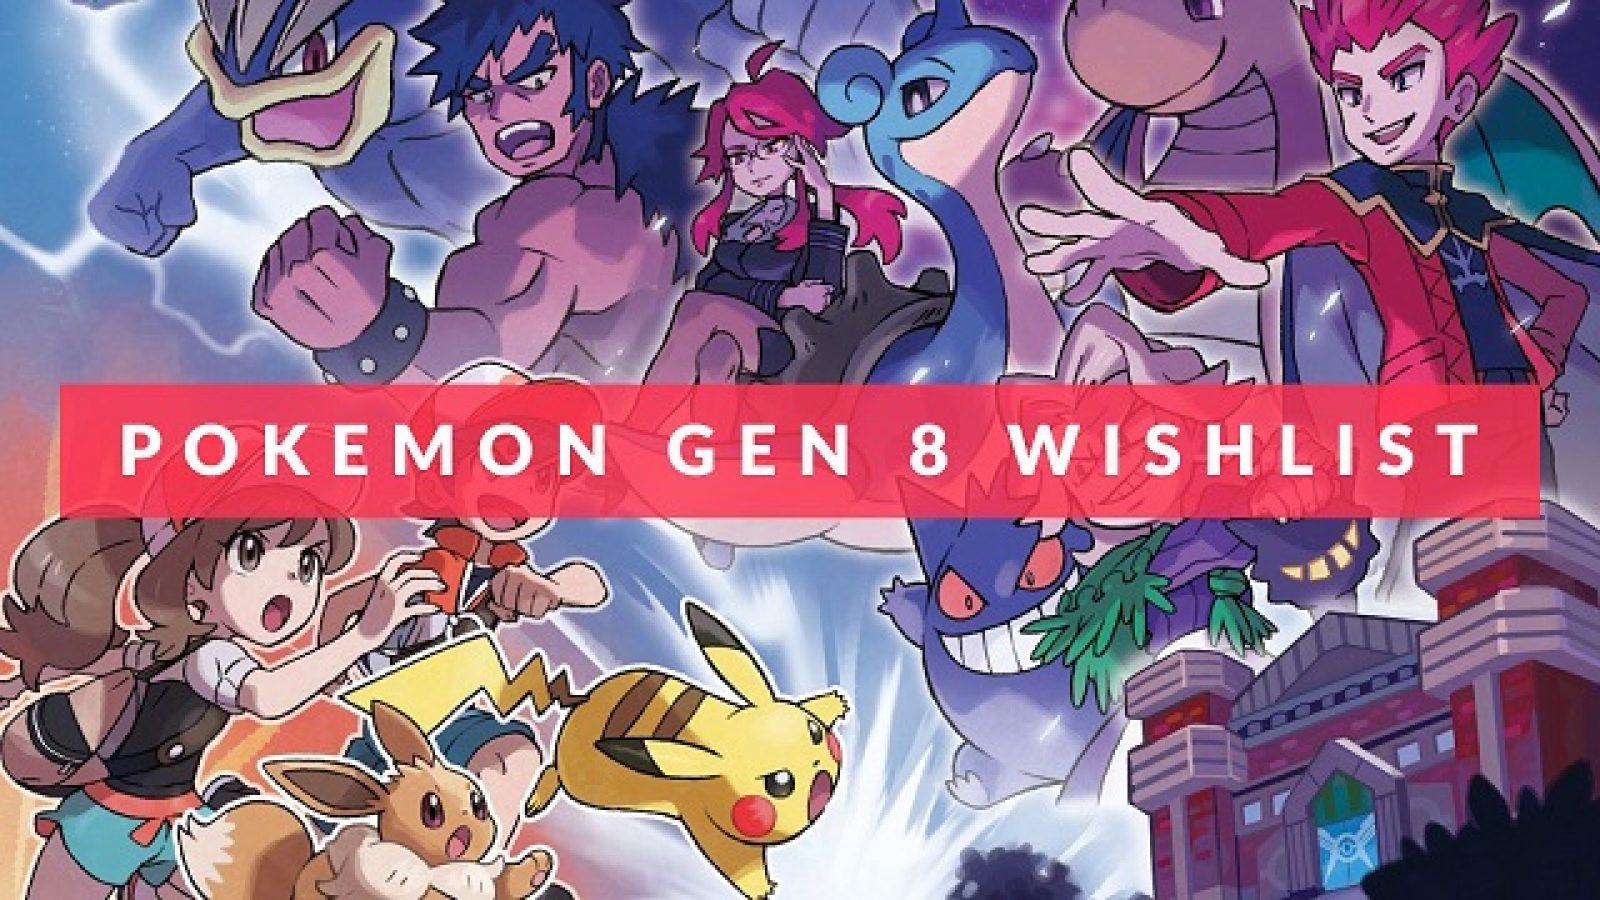 POKÉMON SWORD and SHIELD Reveals 7 New Pokémon (Including